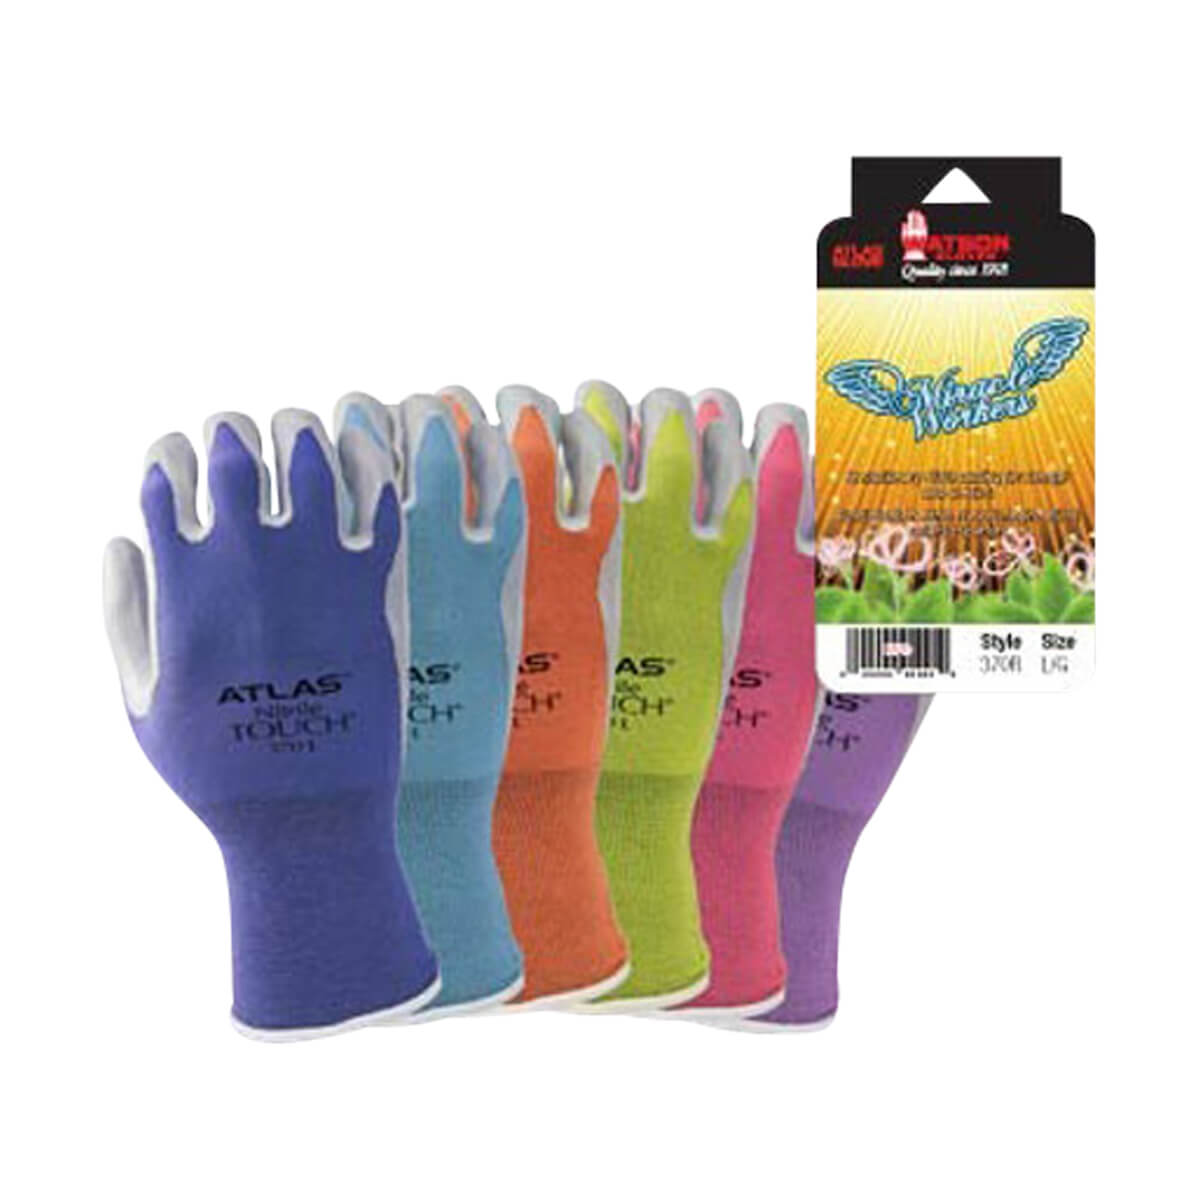 Atlas® Miracle Workers Gloves